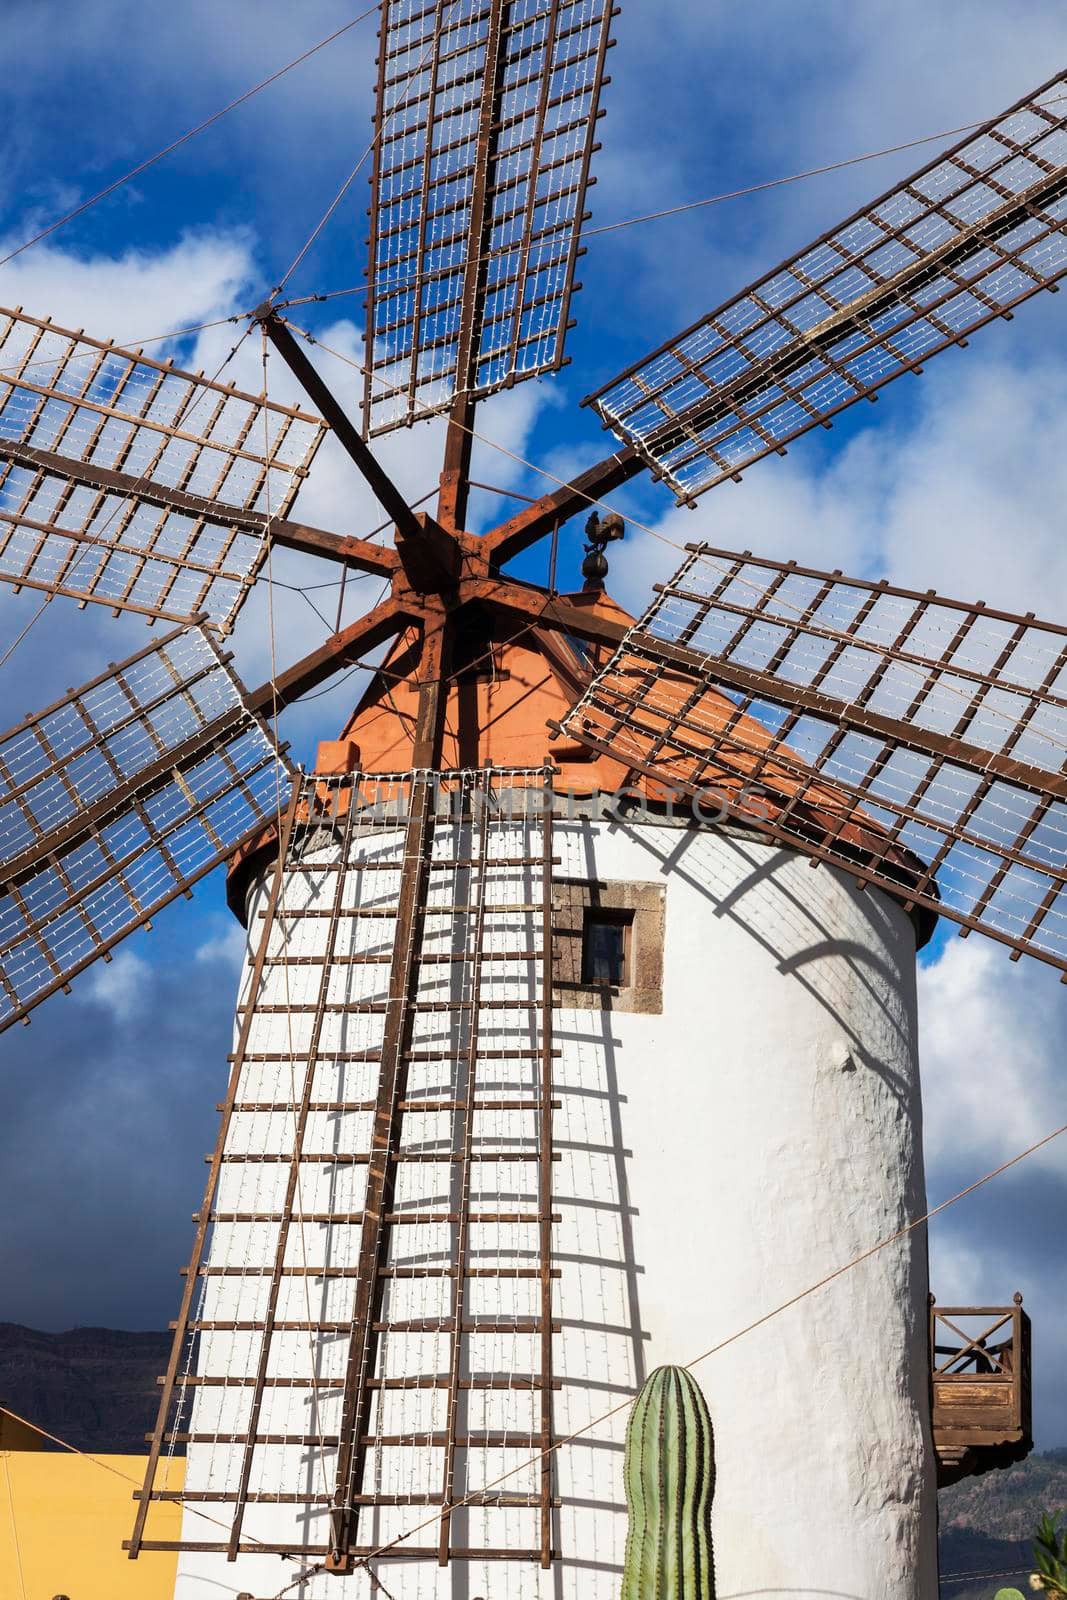 Windmill on Gran Canaria. Morgan, Gran Canaria, Canary Islands, Spain.